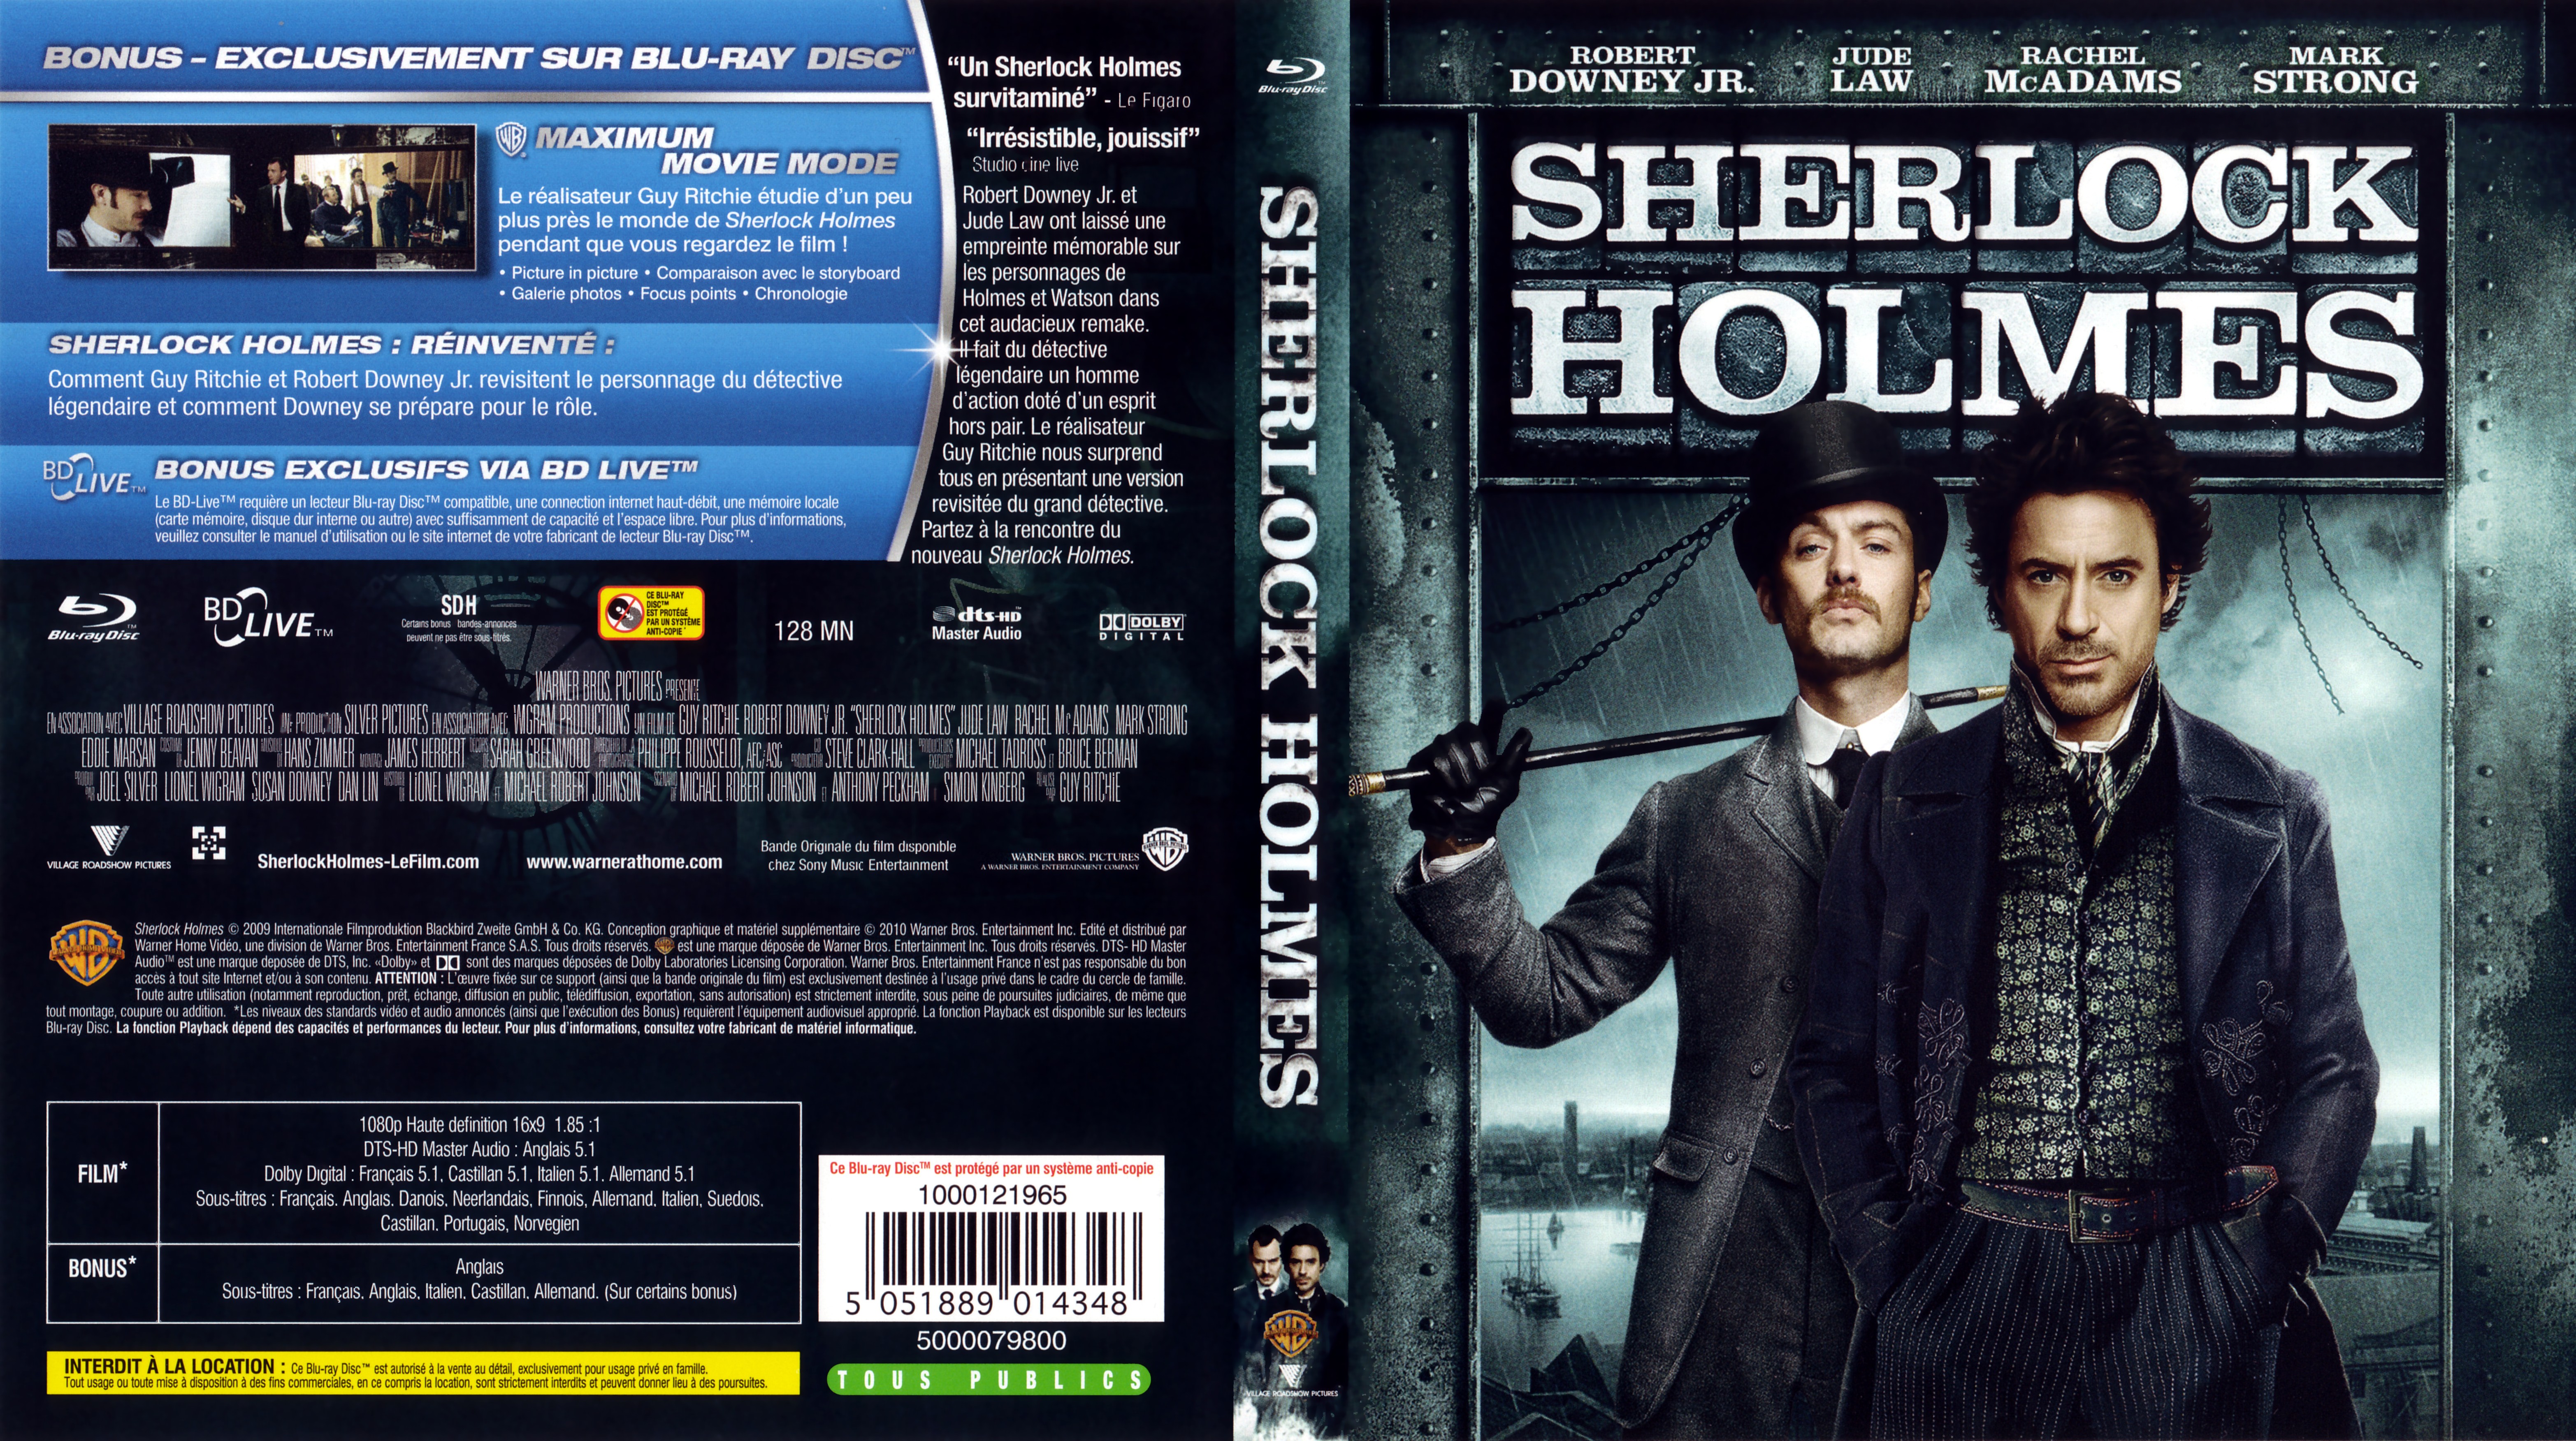 Jaquette DVD Sherlock Holmes (BLU-RAY) v2